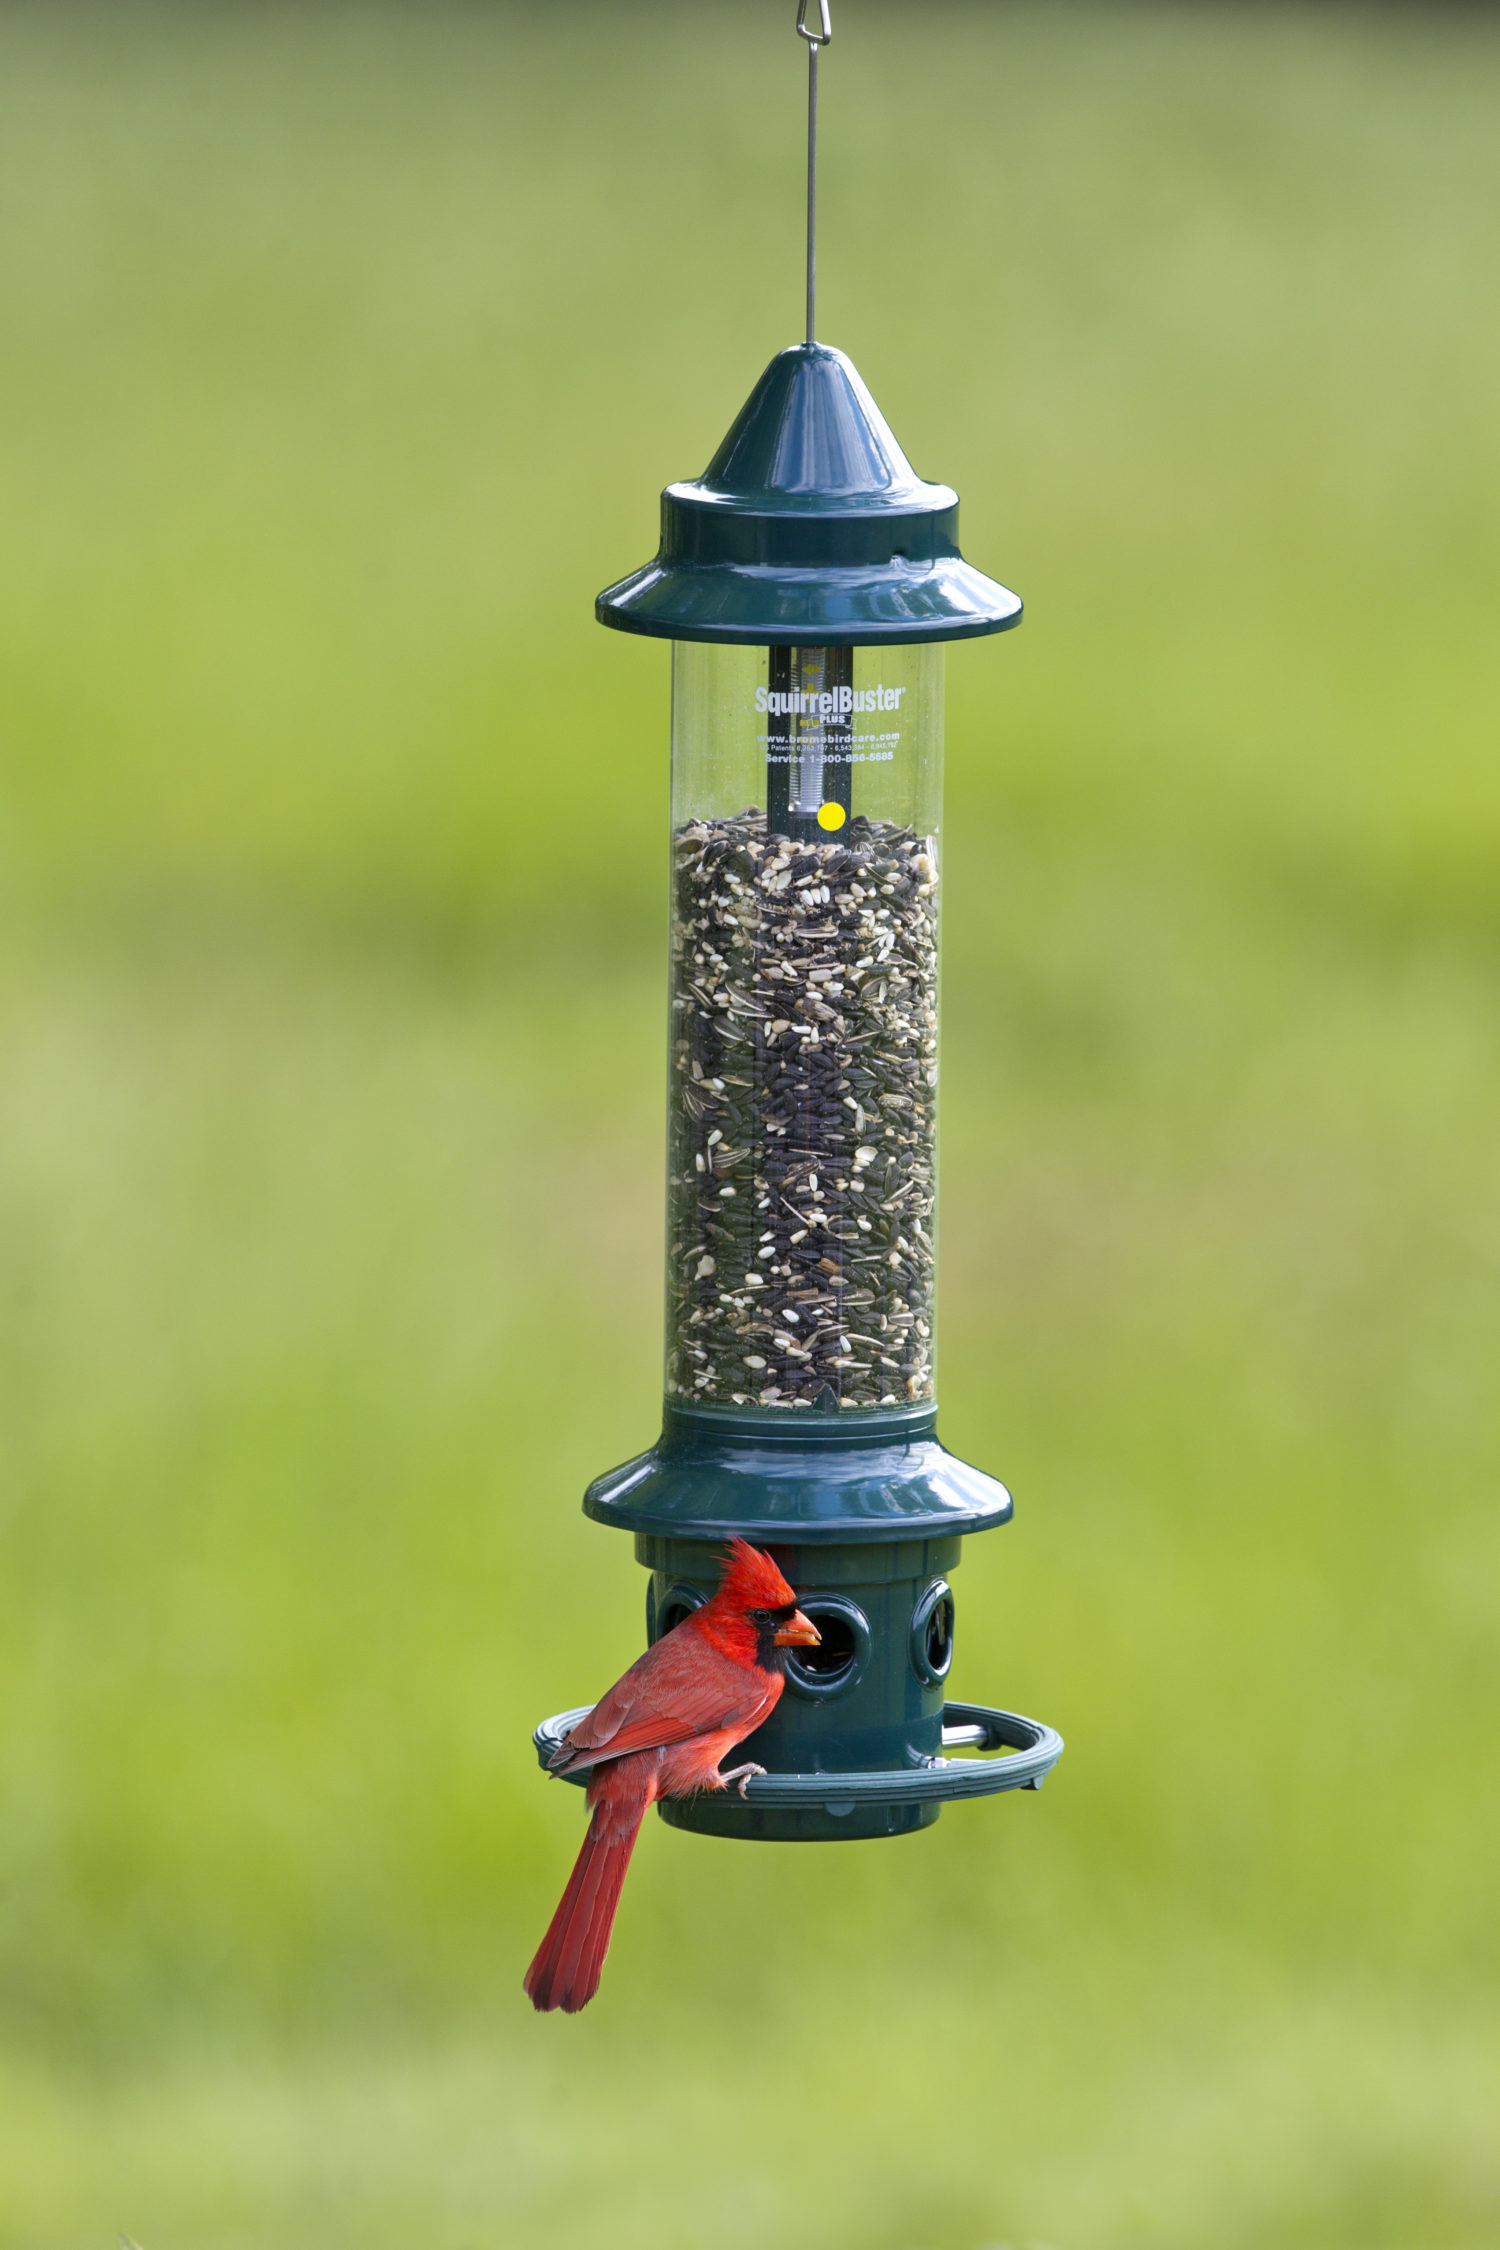 BROME BIRD CARE Bird feeder